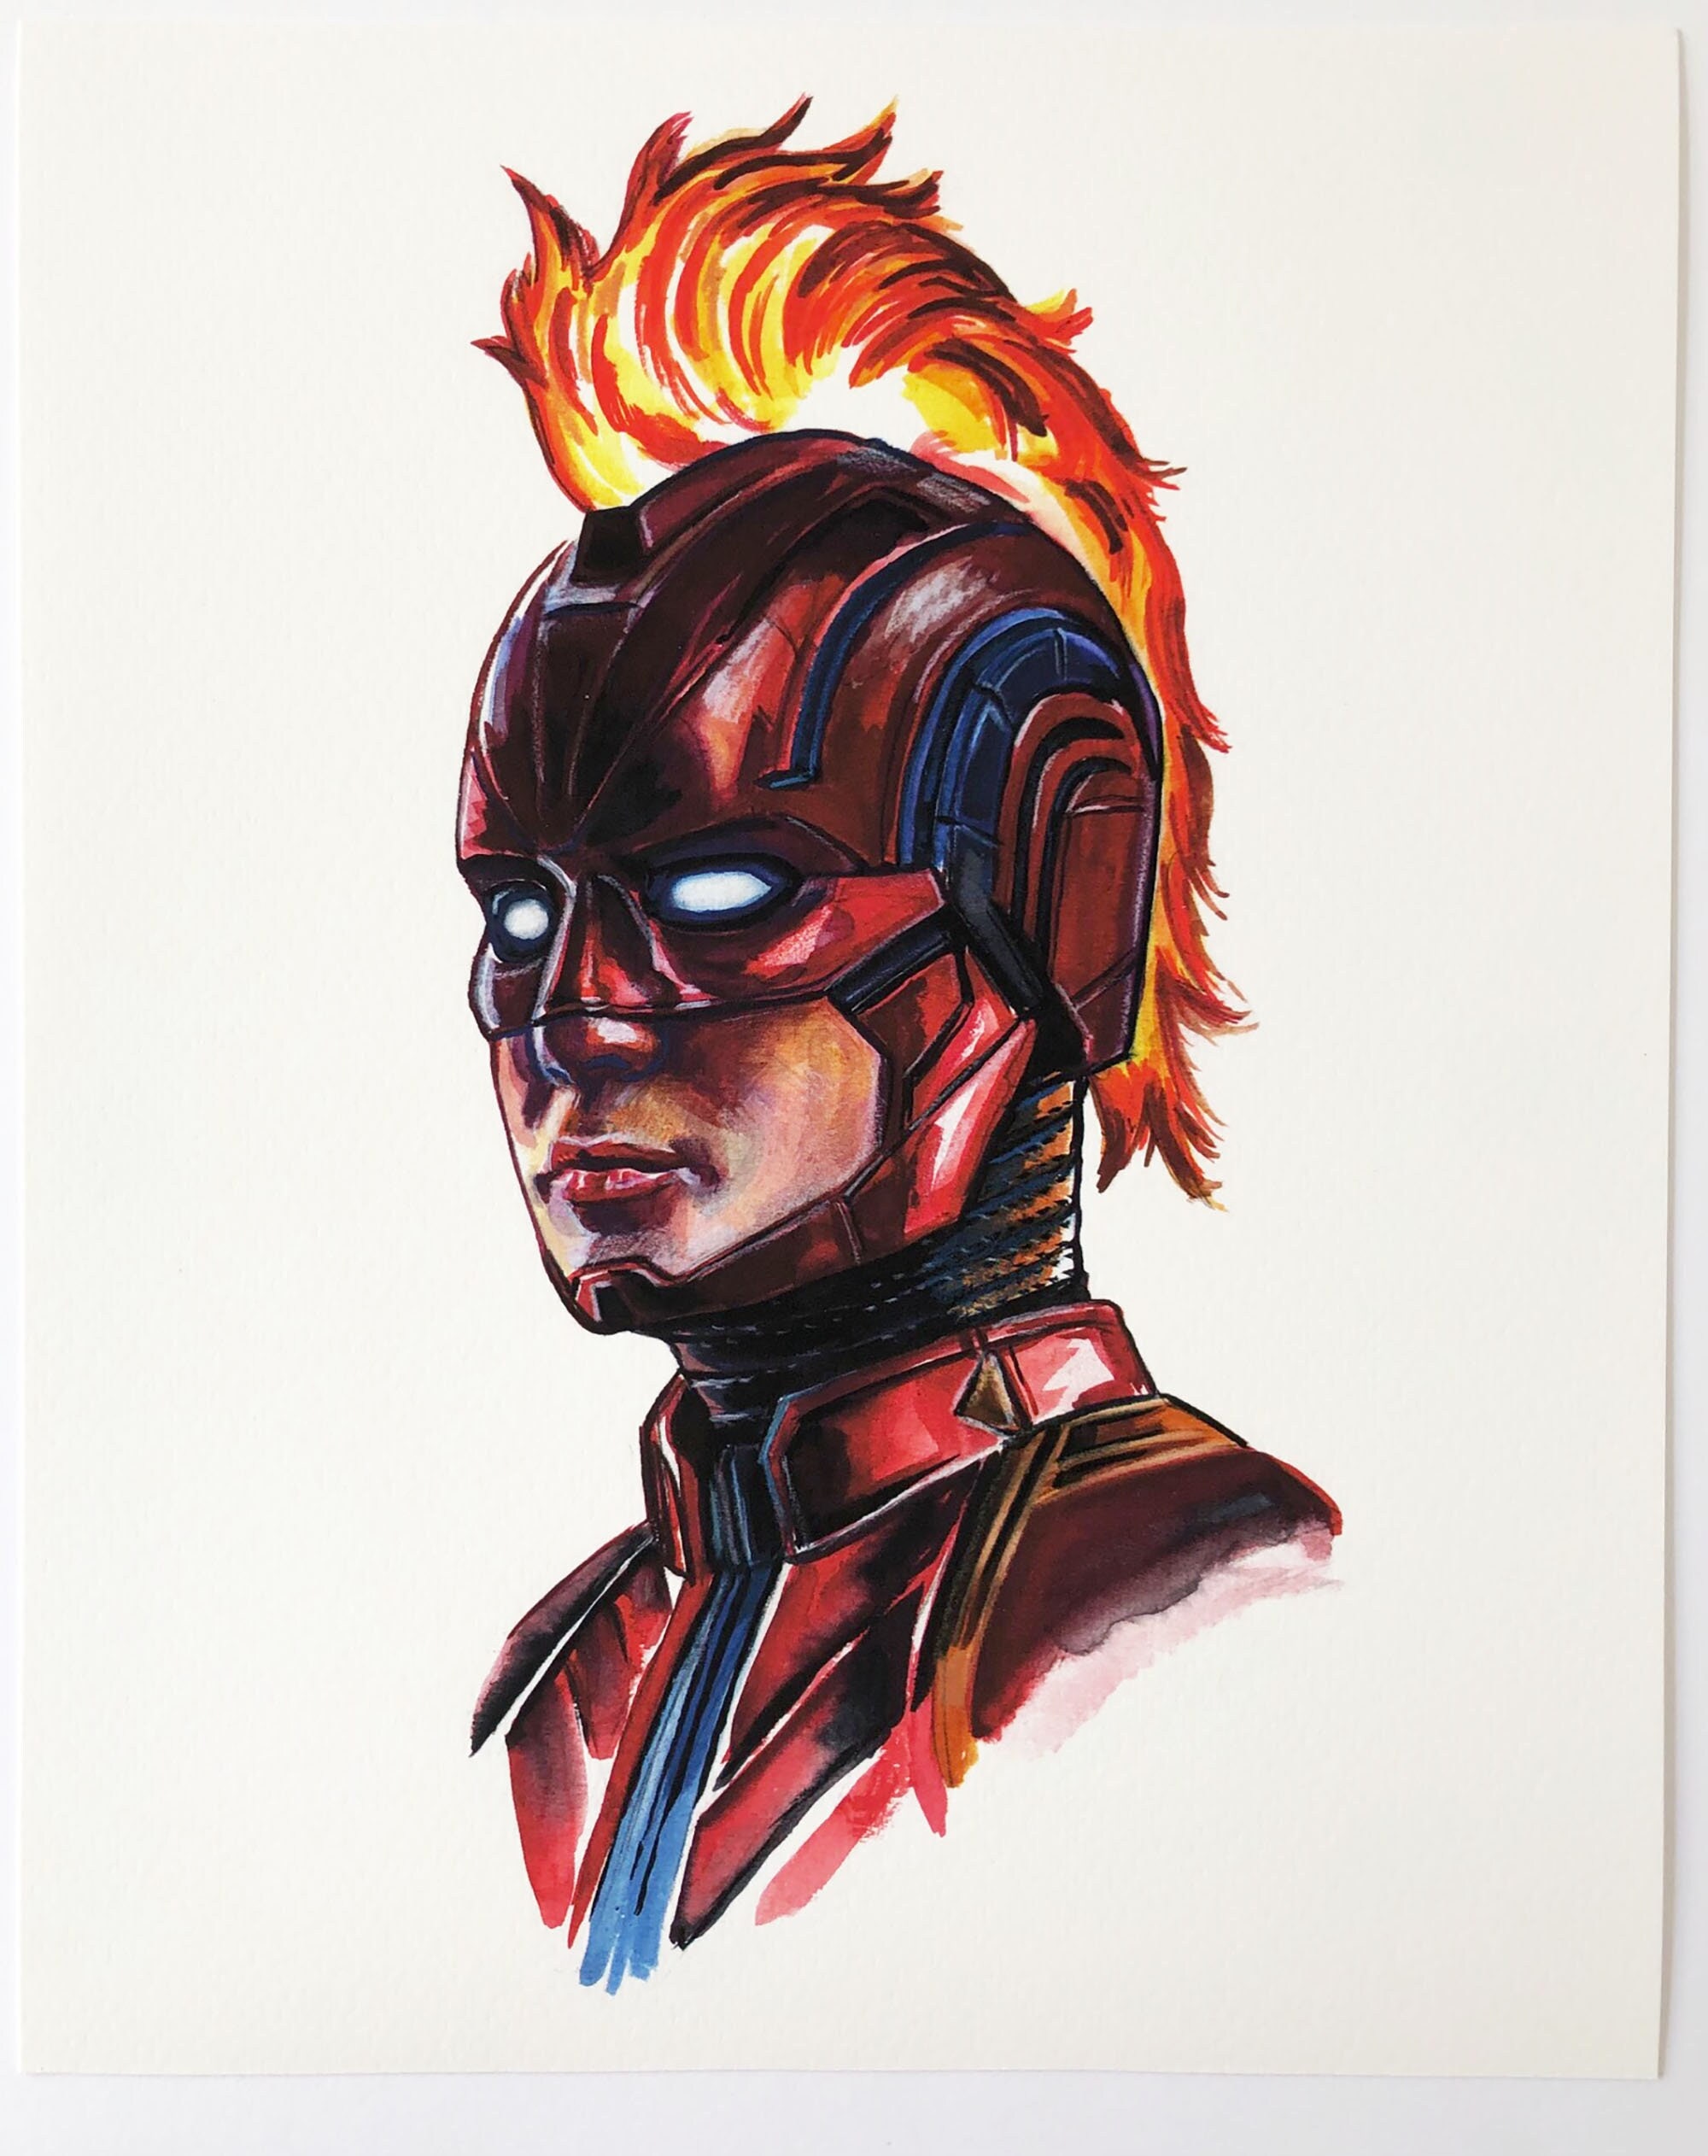 Carol Danvers Captain Marvel - 5D Diamond Paintings